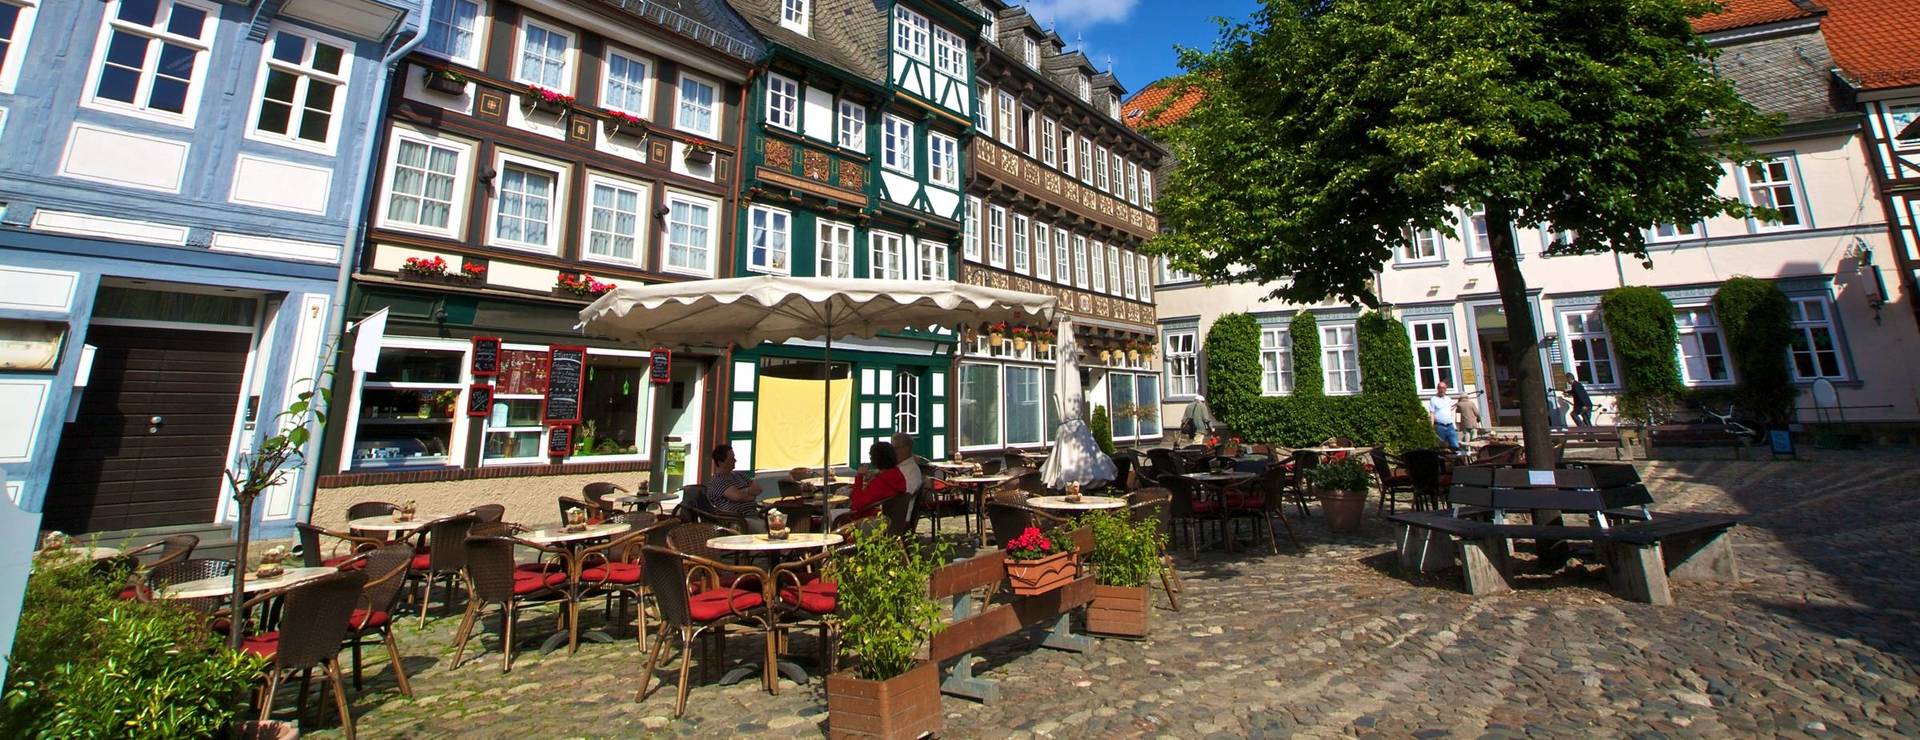 Old town - H+ Hotel Goslar